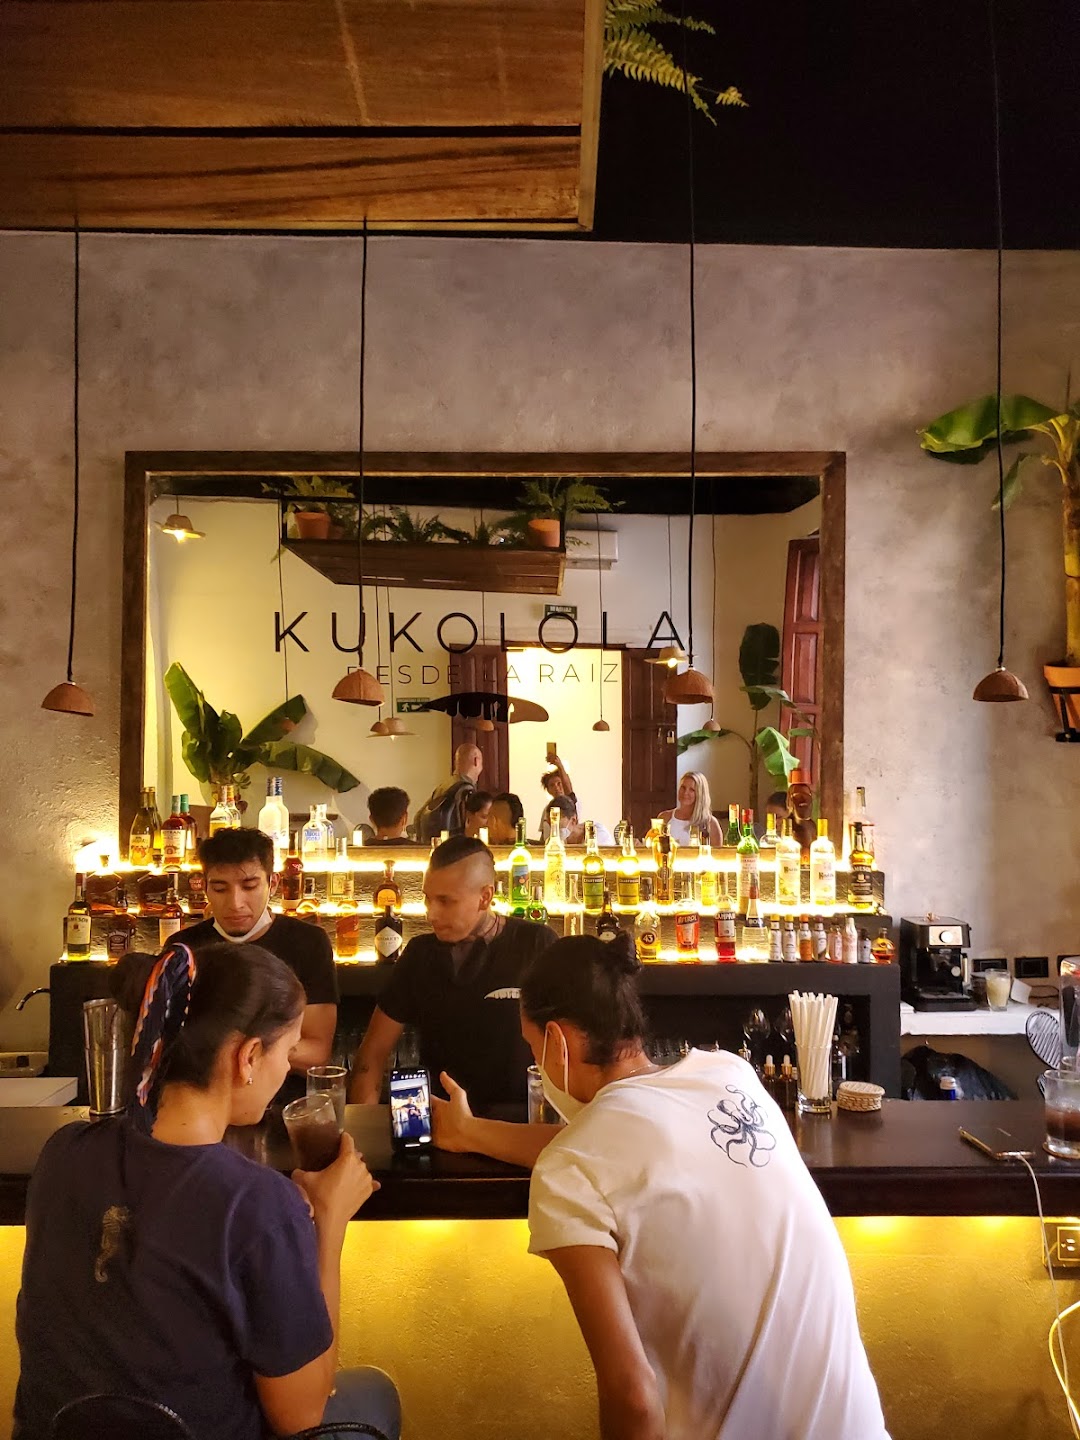 Kukolola Bar